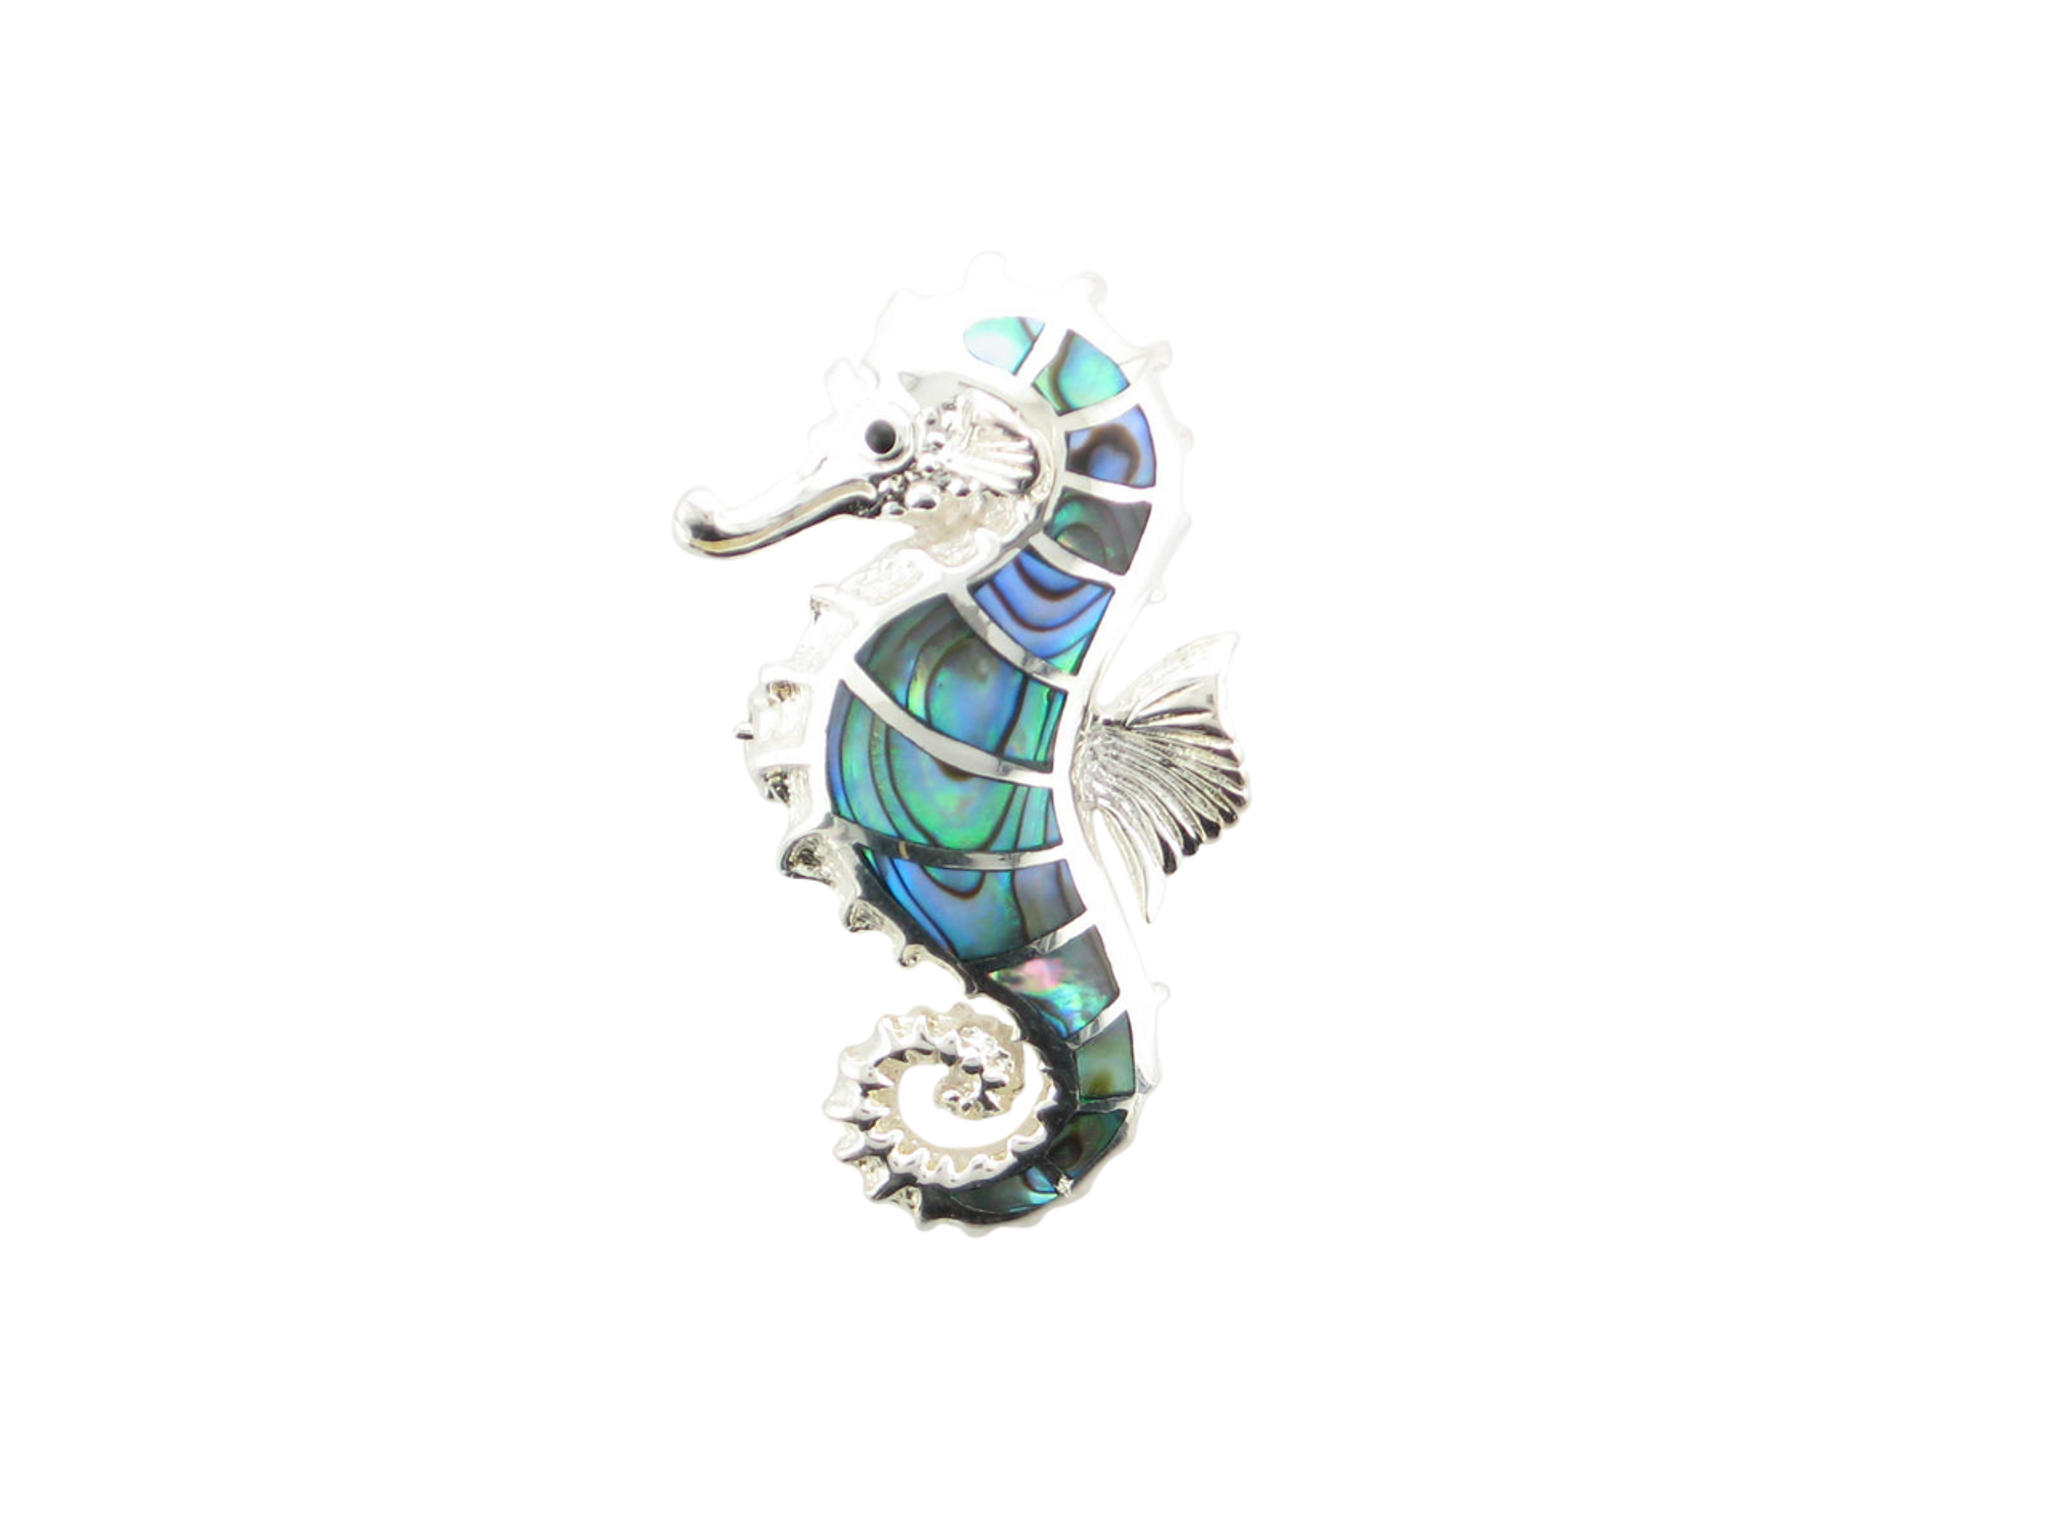 Seahorse Wave Necklace Pendant Blue Topaz Paua Abalone 